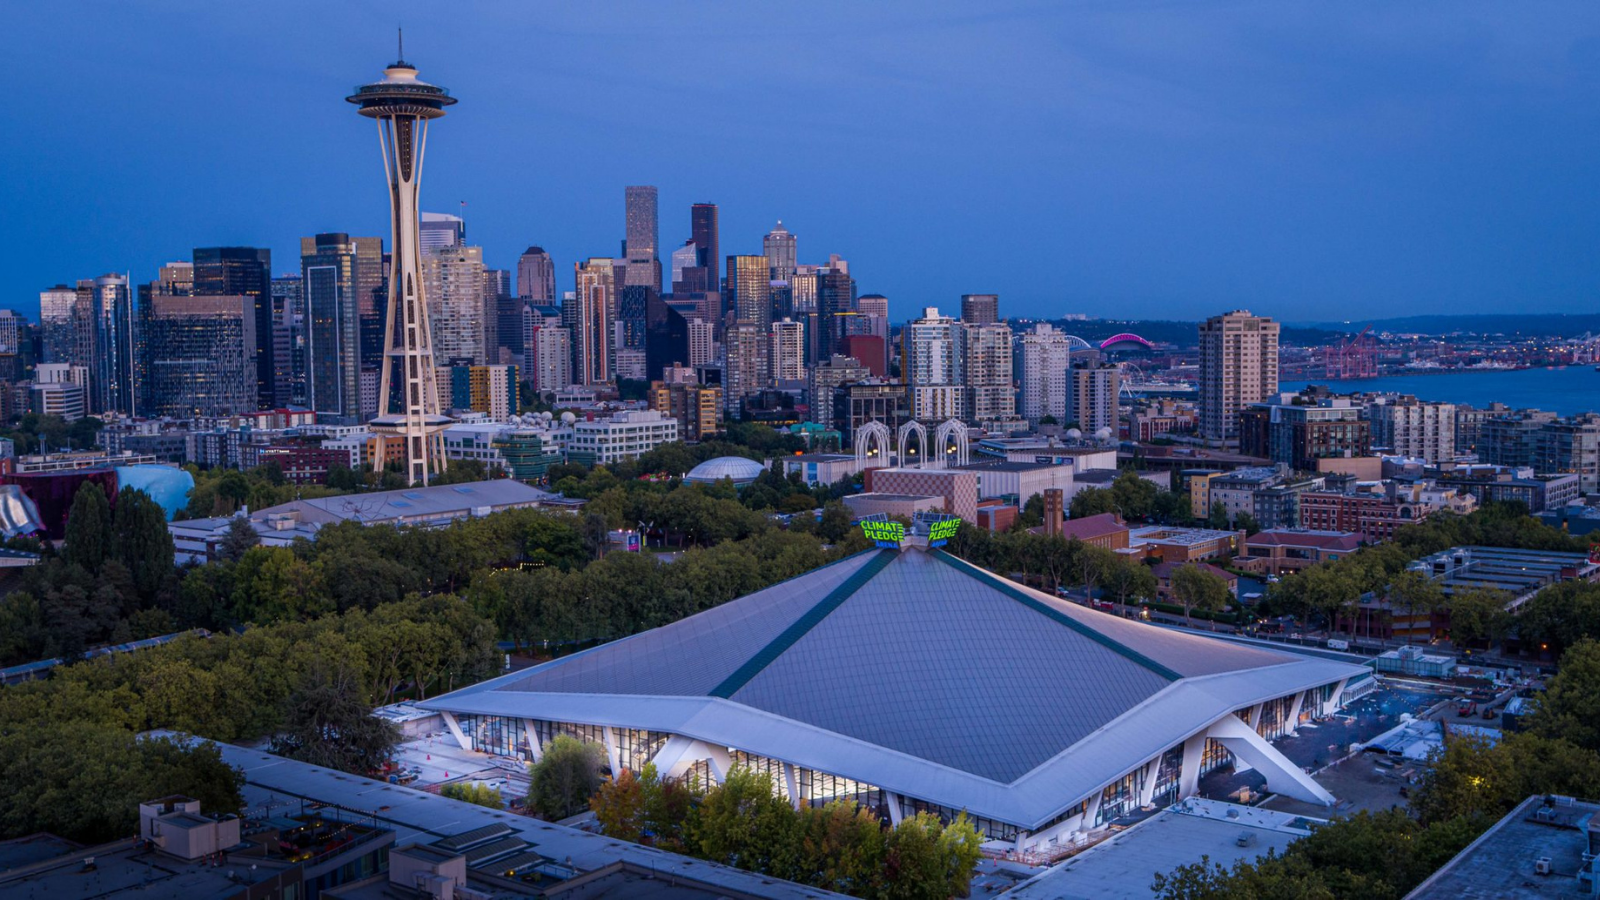 Seattle Kraken, Founding, History, Arena, & Facts